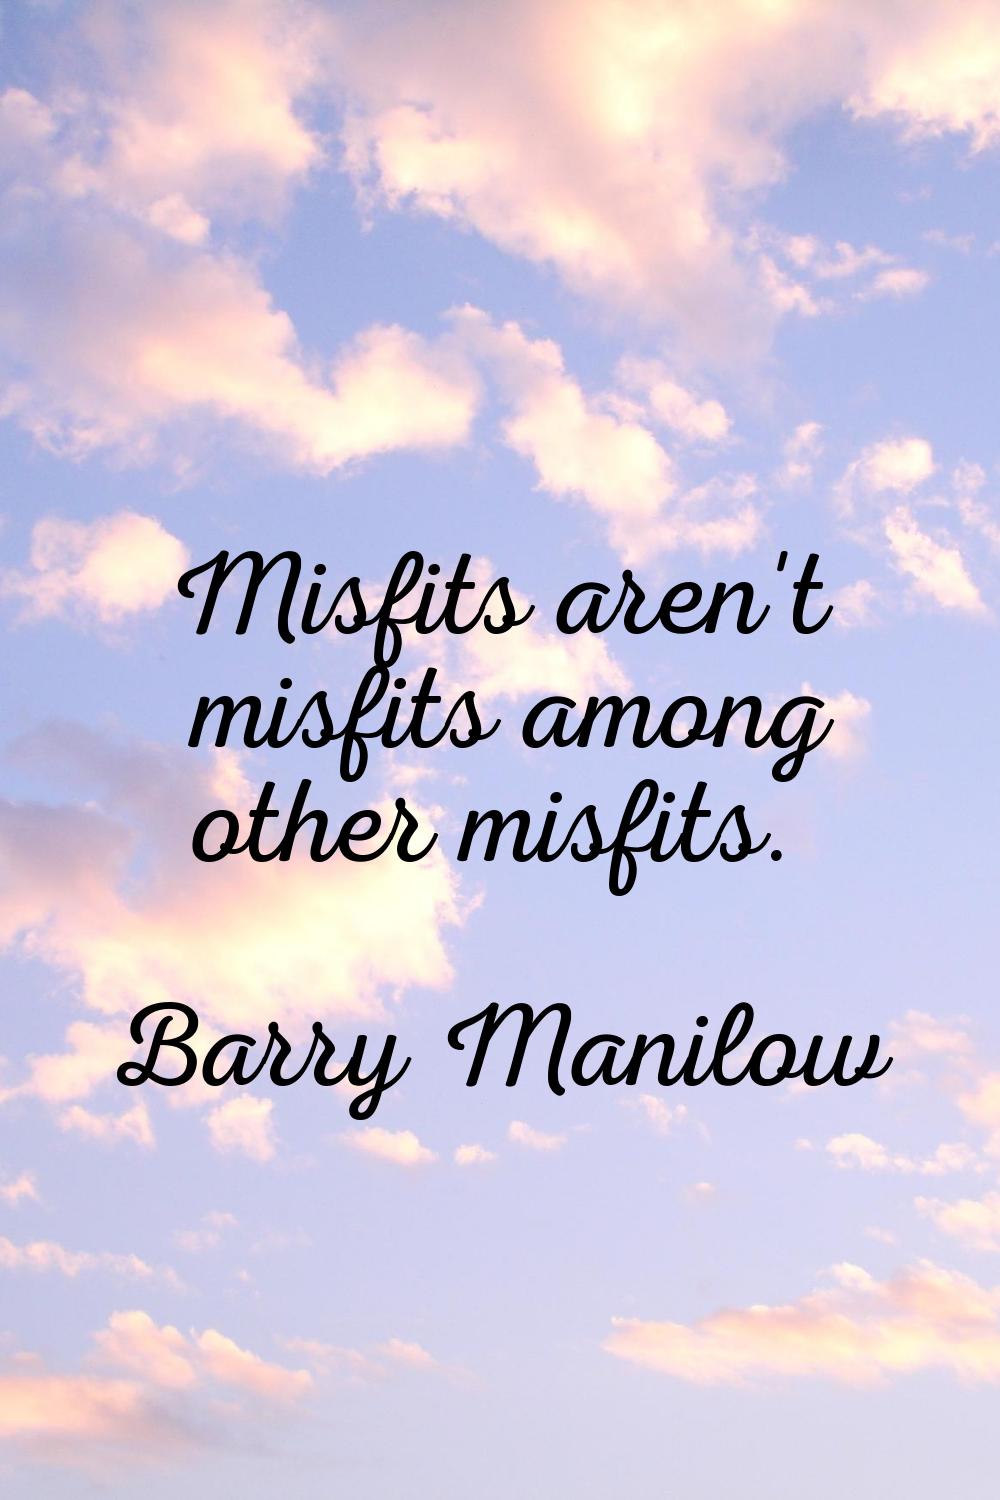 Misfits aren't misfits among other misfits.